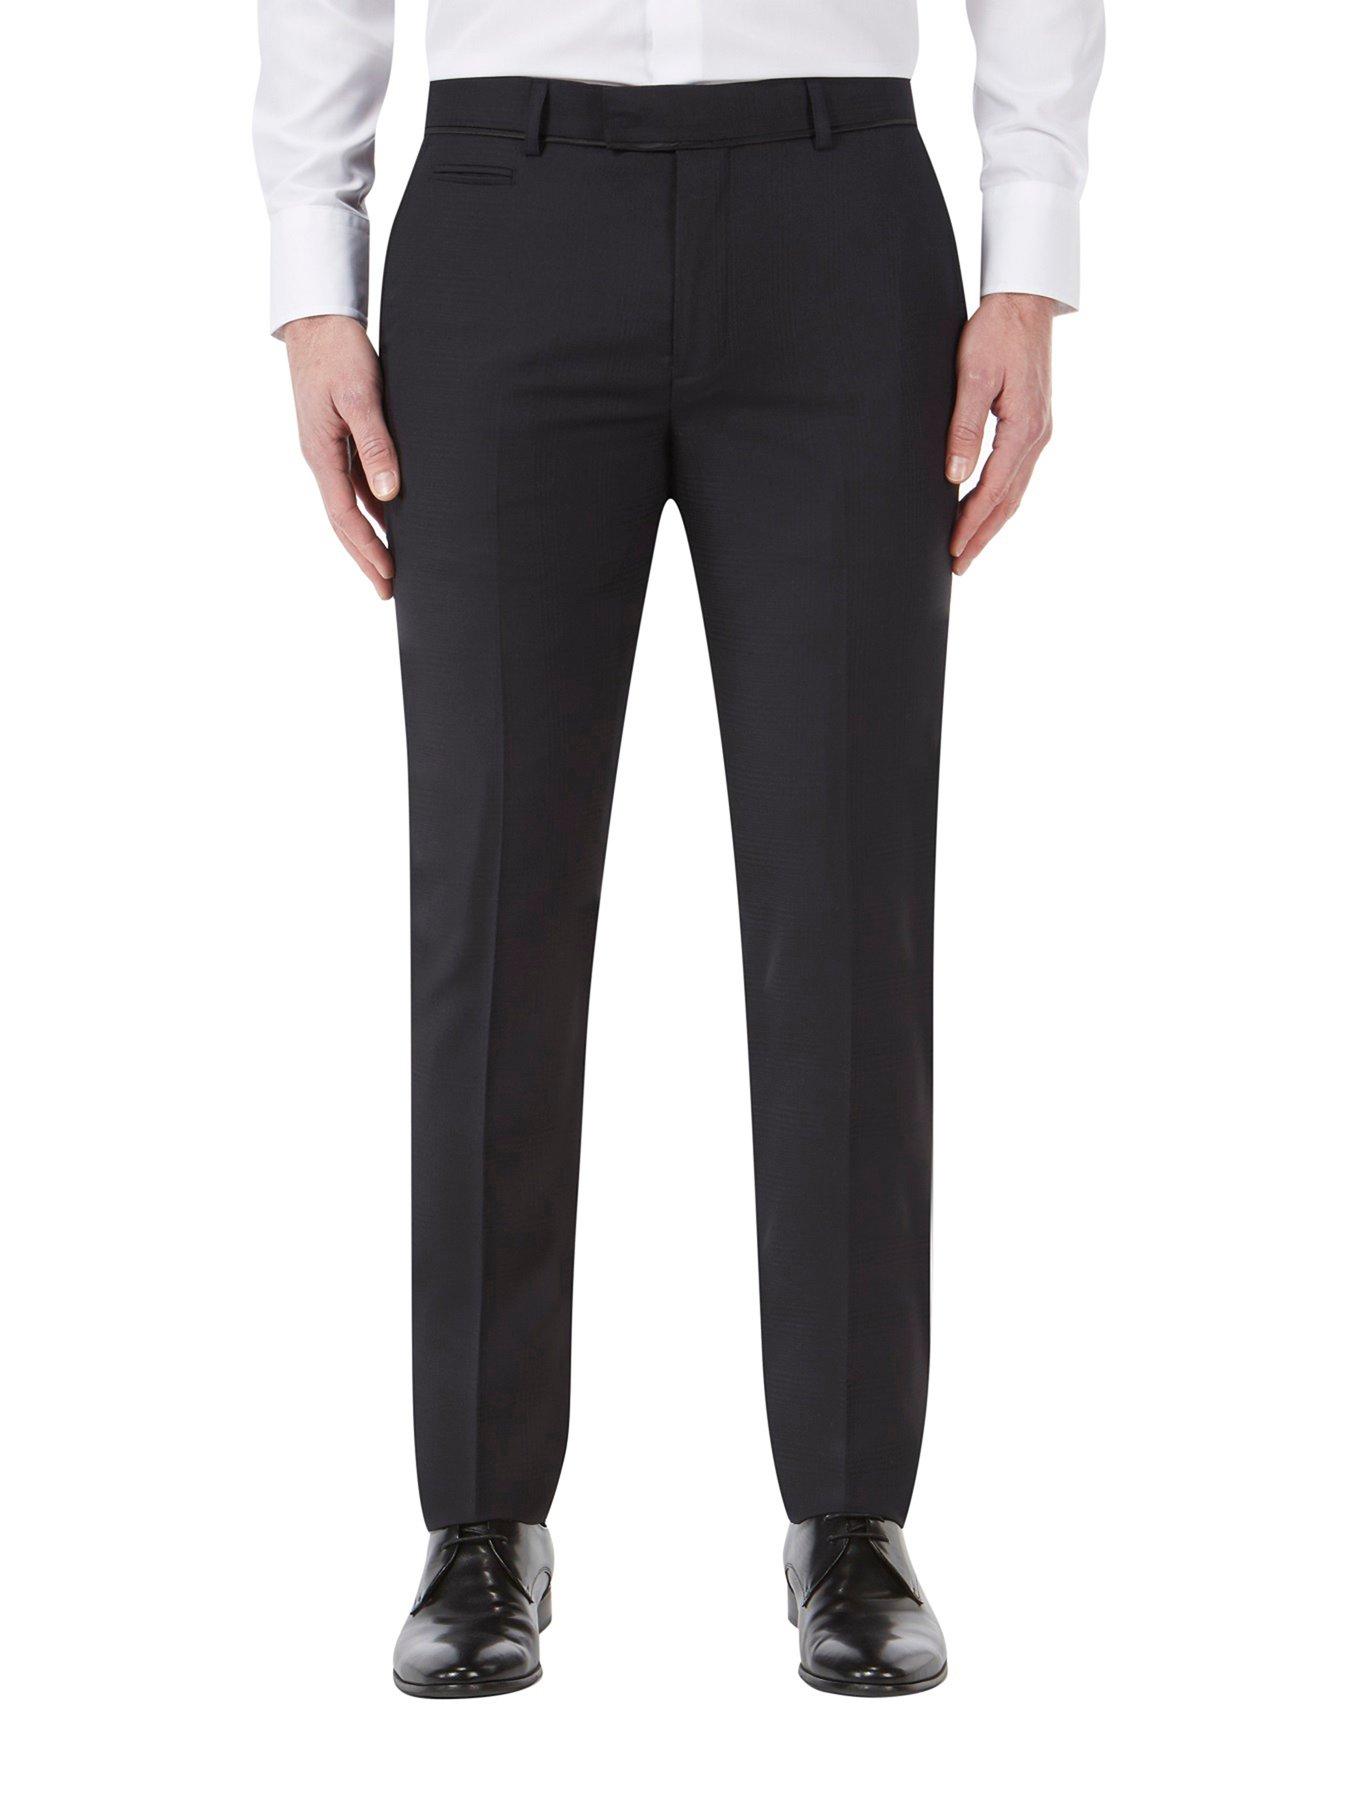 Buy Peter England Men Black Check Slim Fit Formal Trousers online